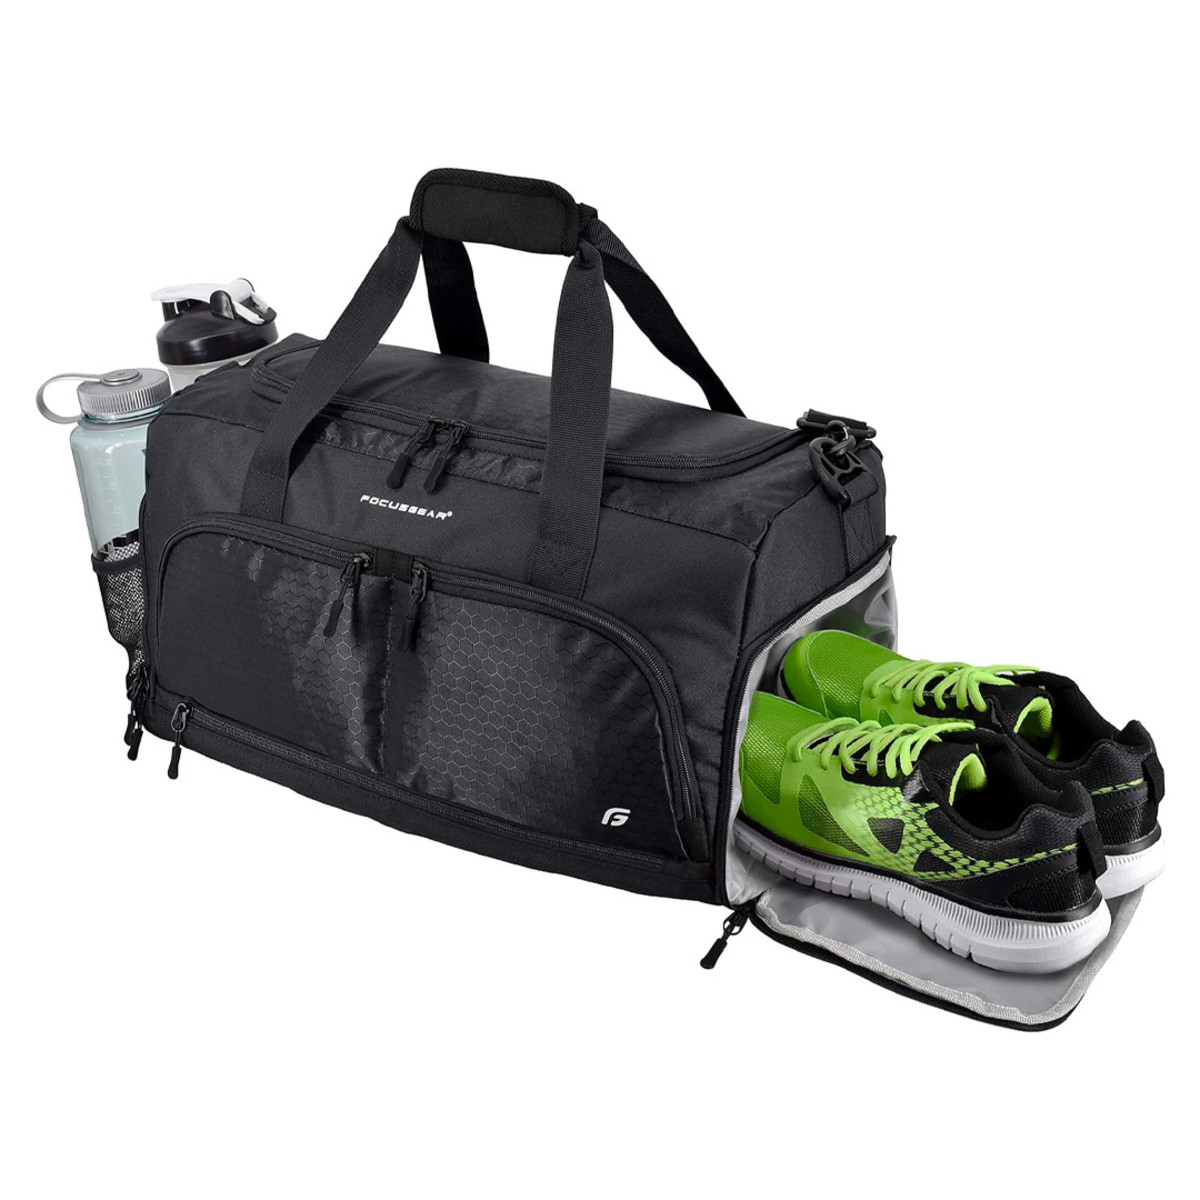 https://www.mensjournal.com/.image/t_share/MjAyNzczMDMwNDE2NDkxNTg4/focusgear-ultimate-gym-bag-20-gift.jpg